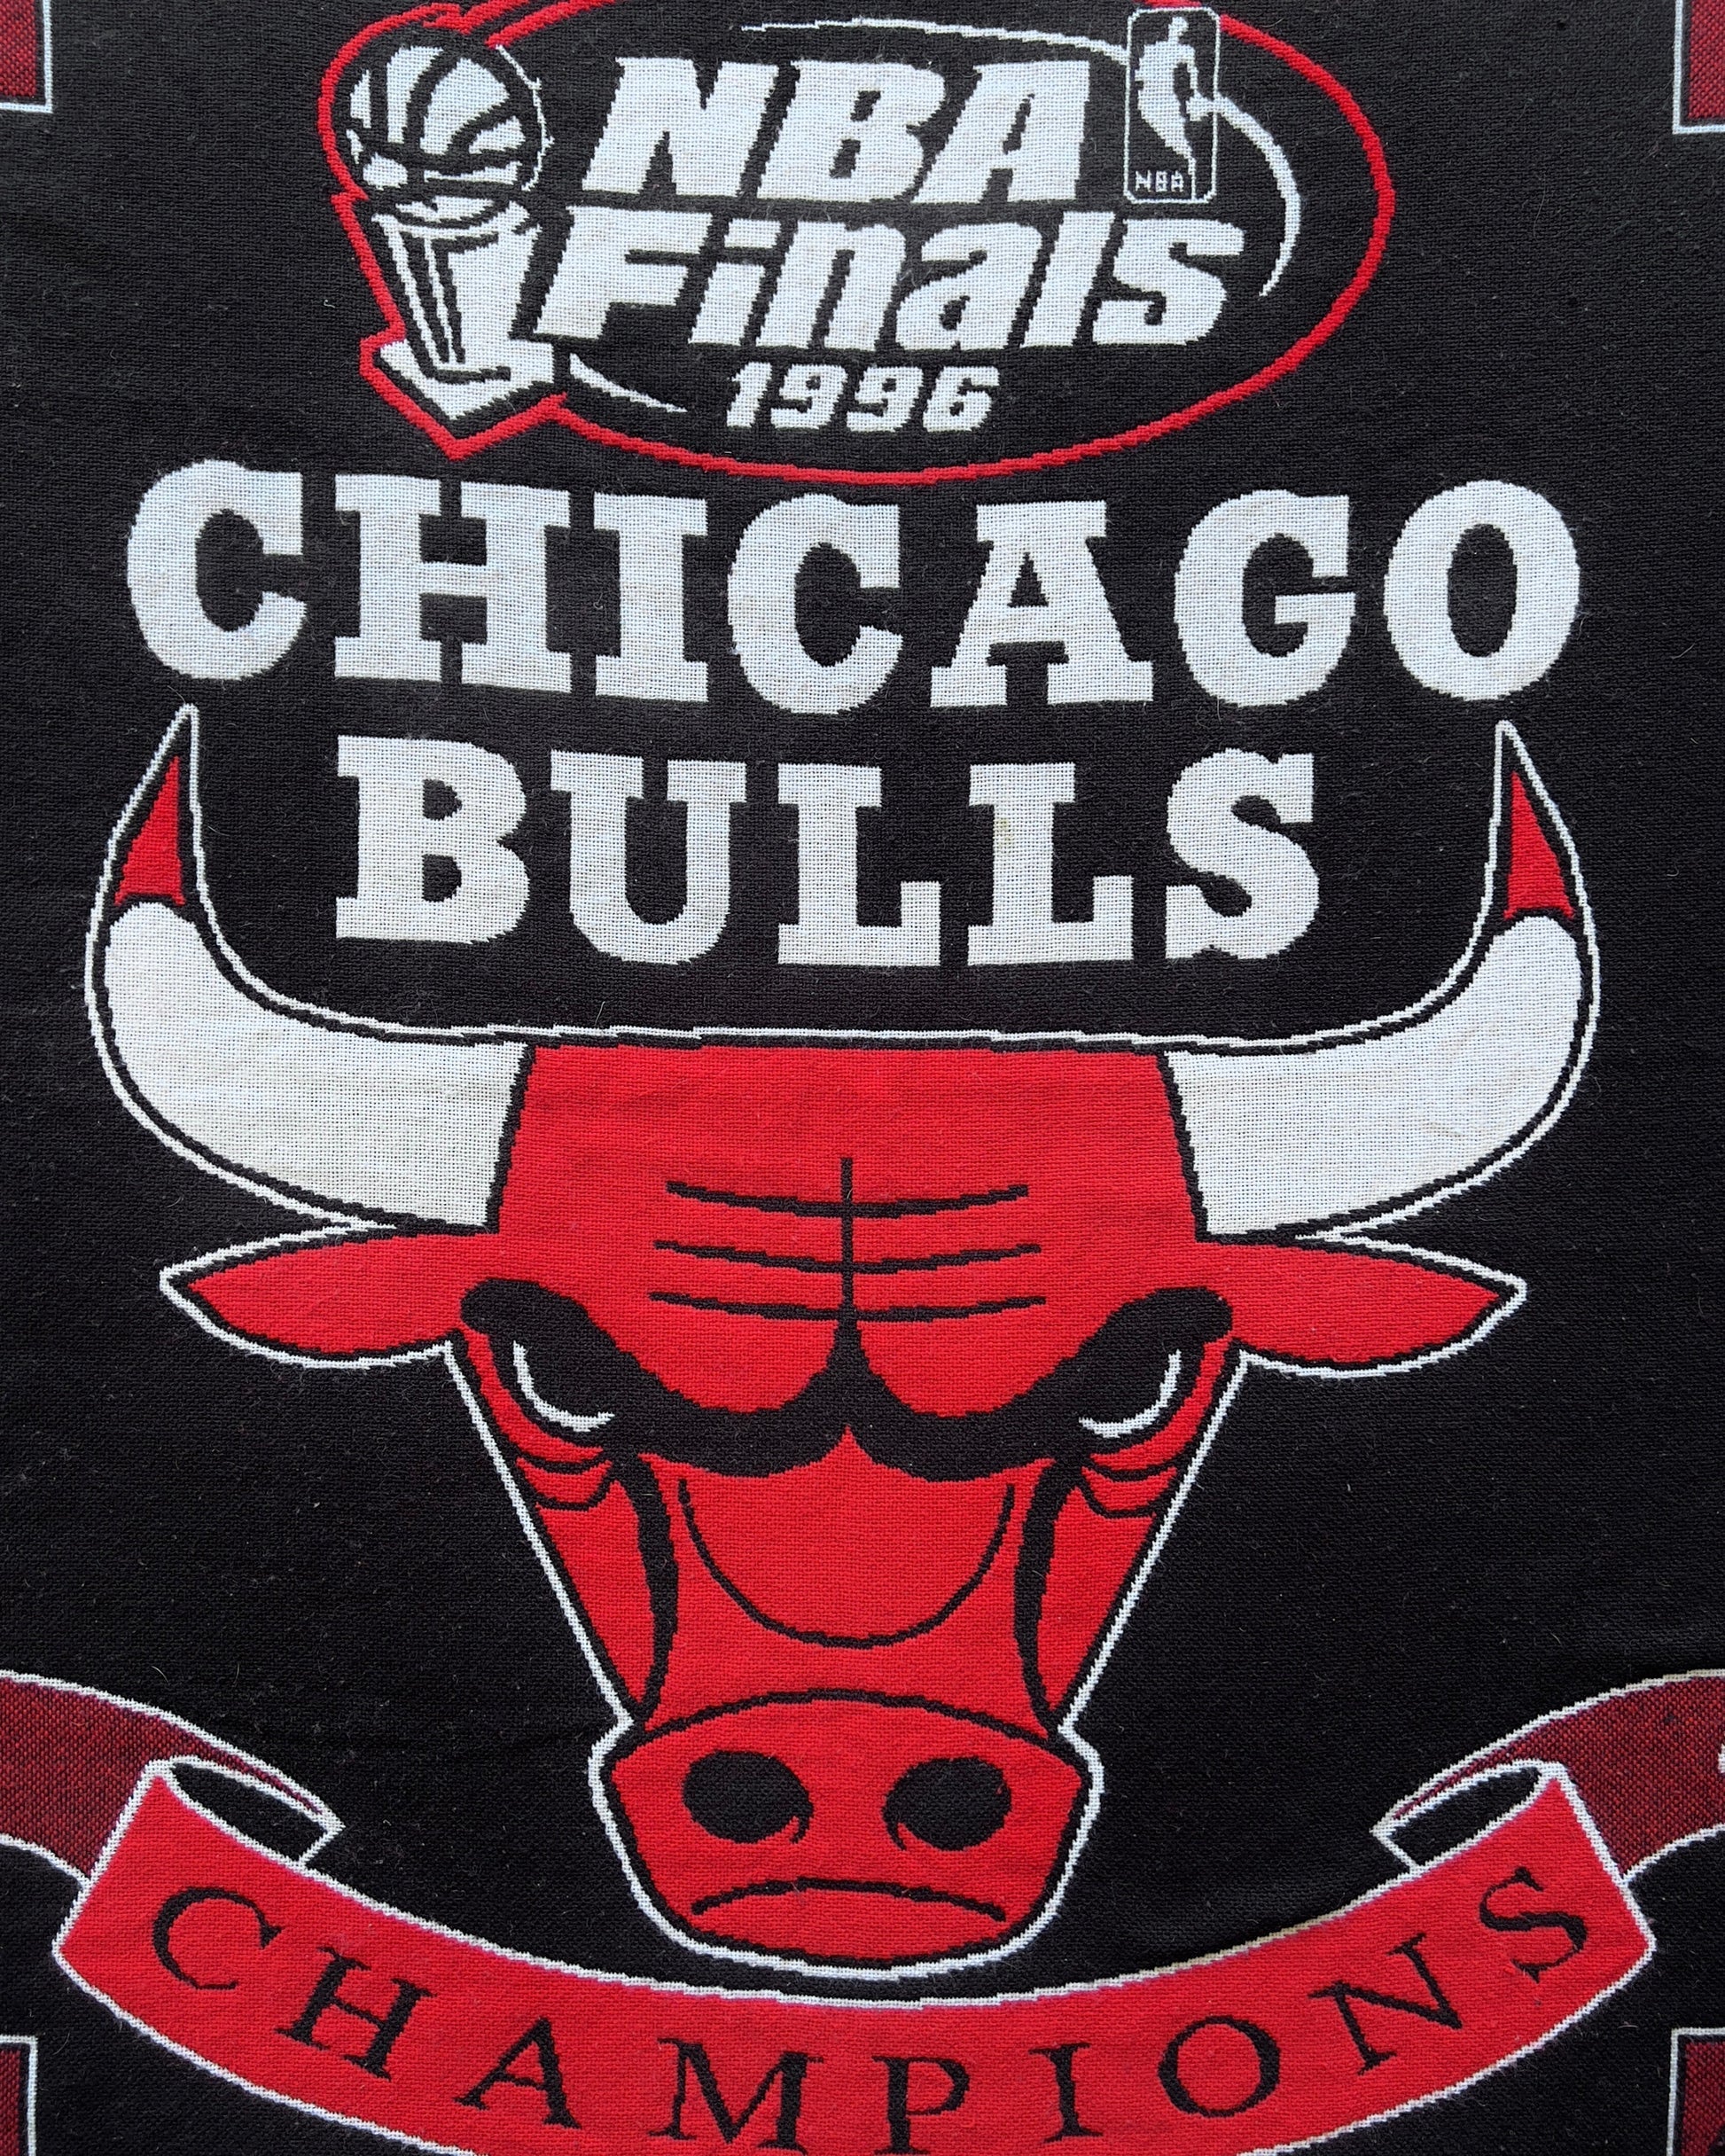 ThreadCount, Shop 1996 Chicago Bulls Finals World Champions Throw Blanket